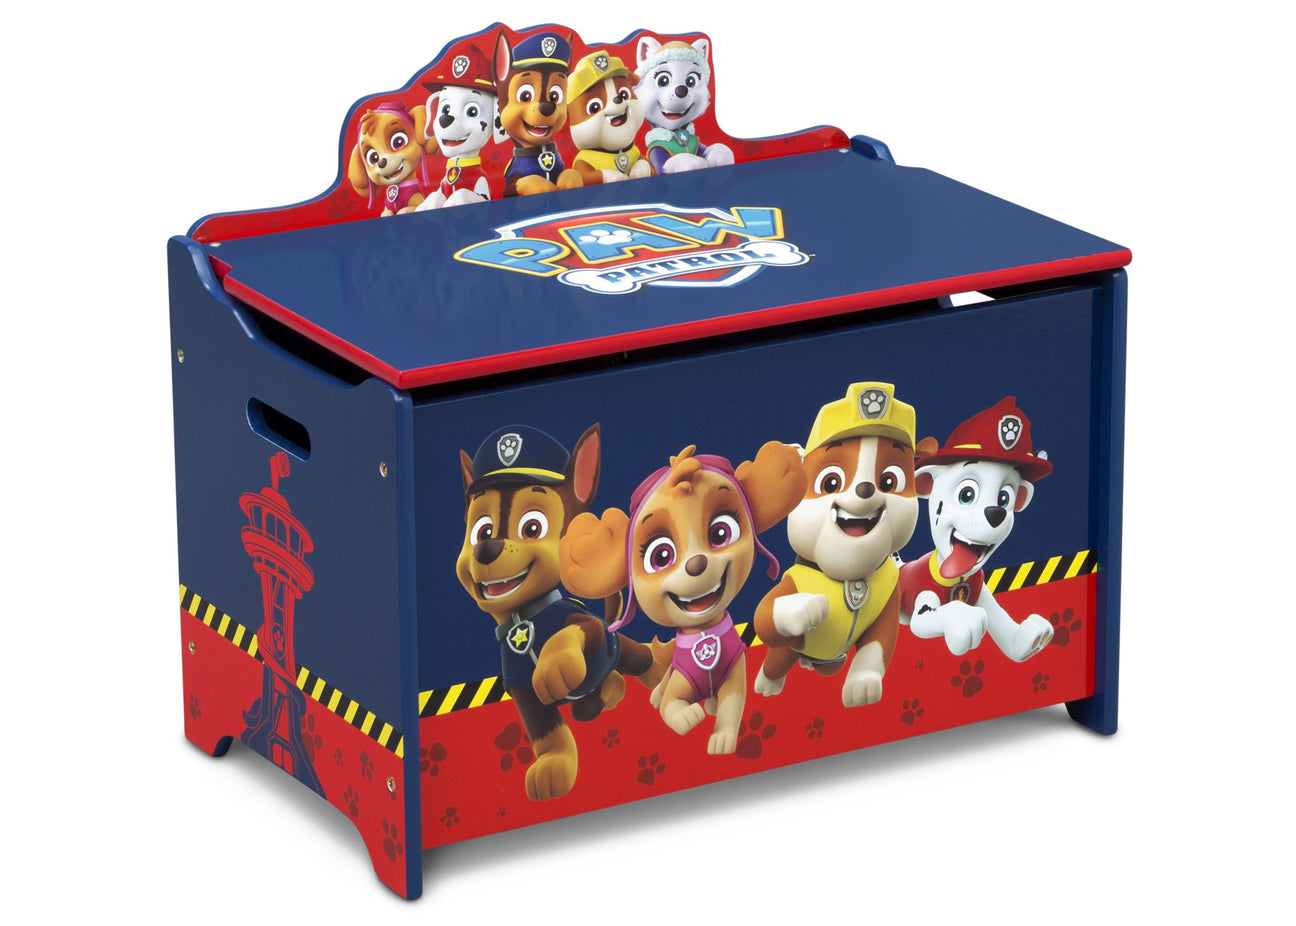 https://www.momjunction.com/wp-content/uploads/product-images/best-durabledelta-children-deluxe-toy-box_afl234.jpg